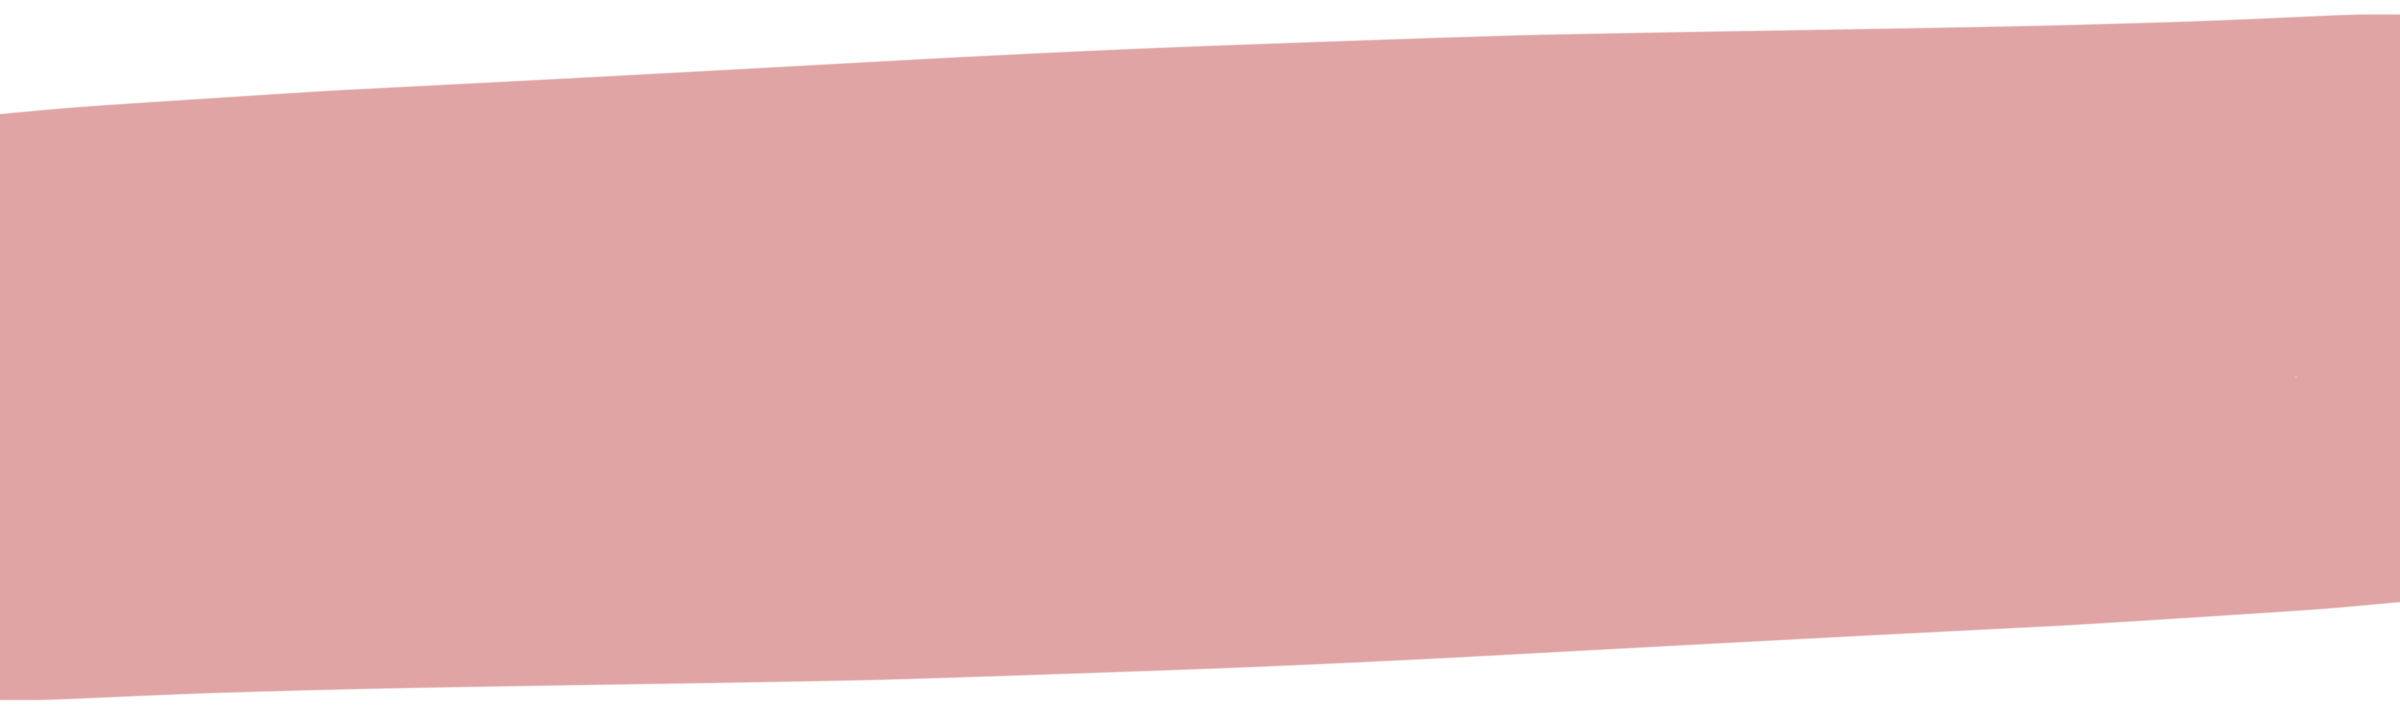 slant-pink